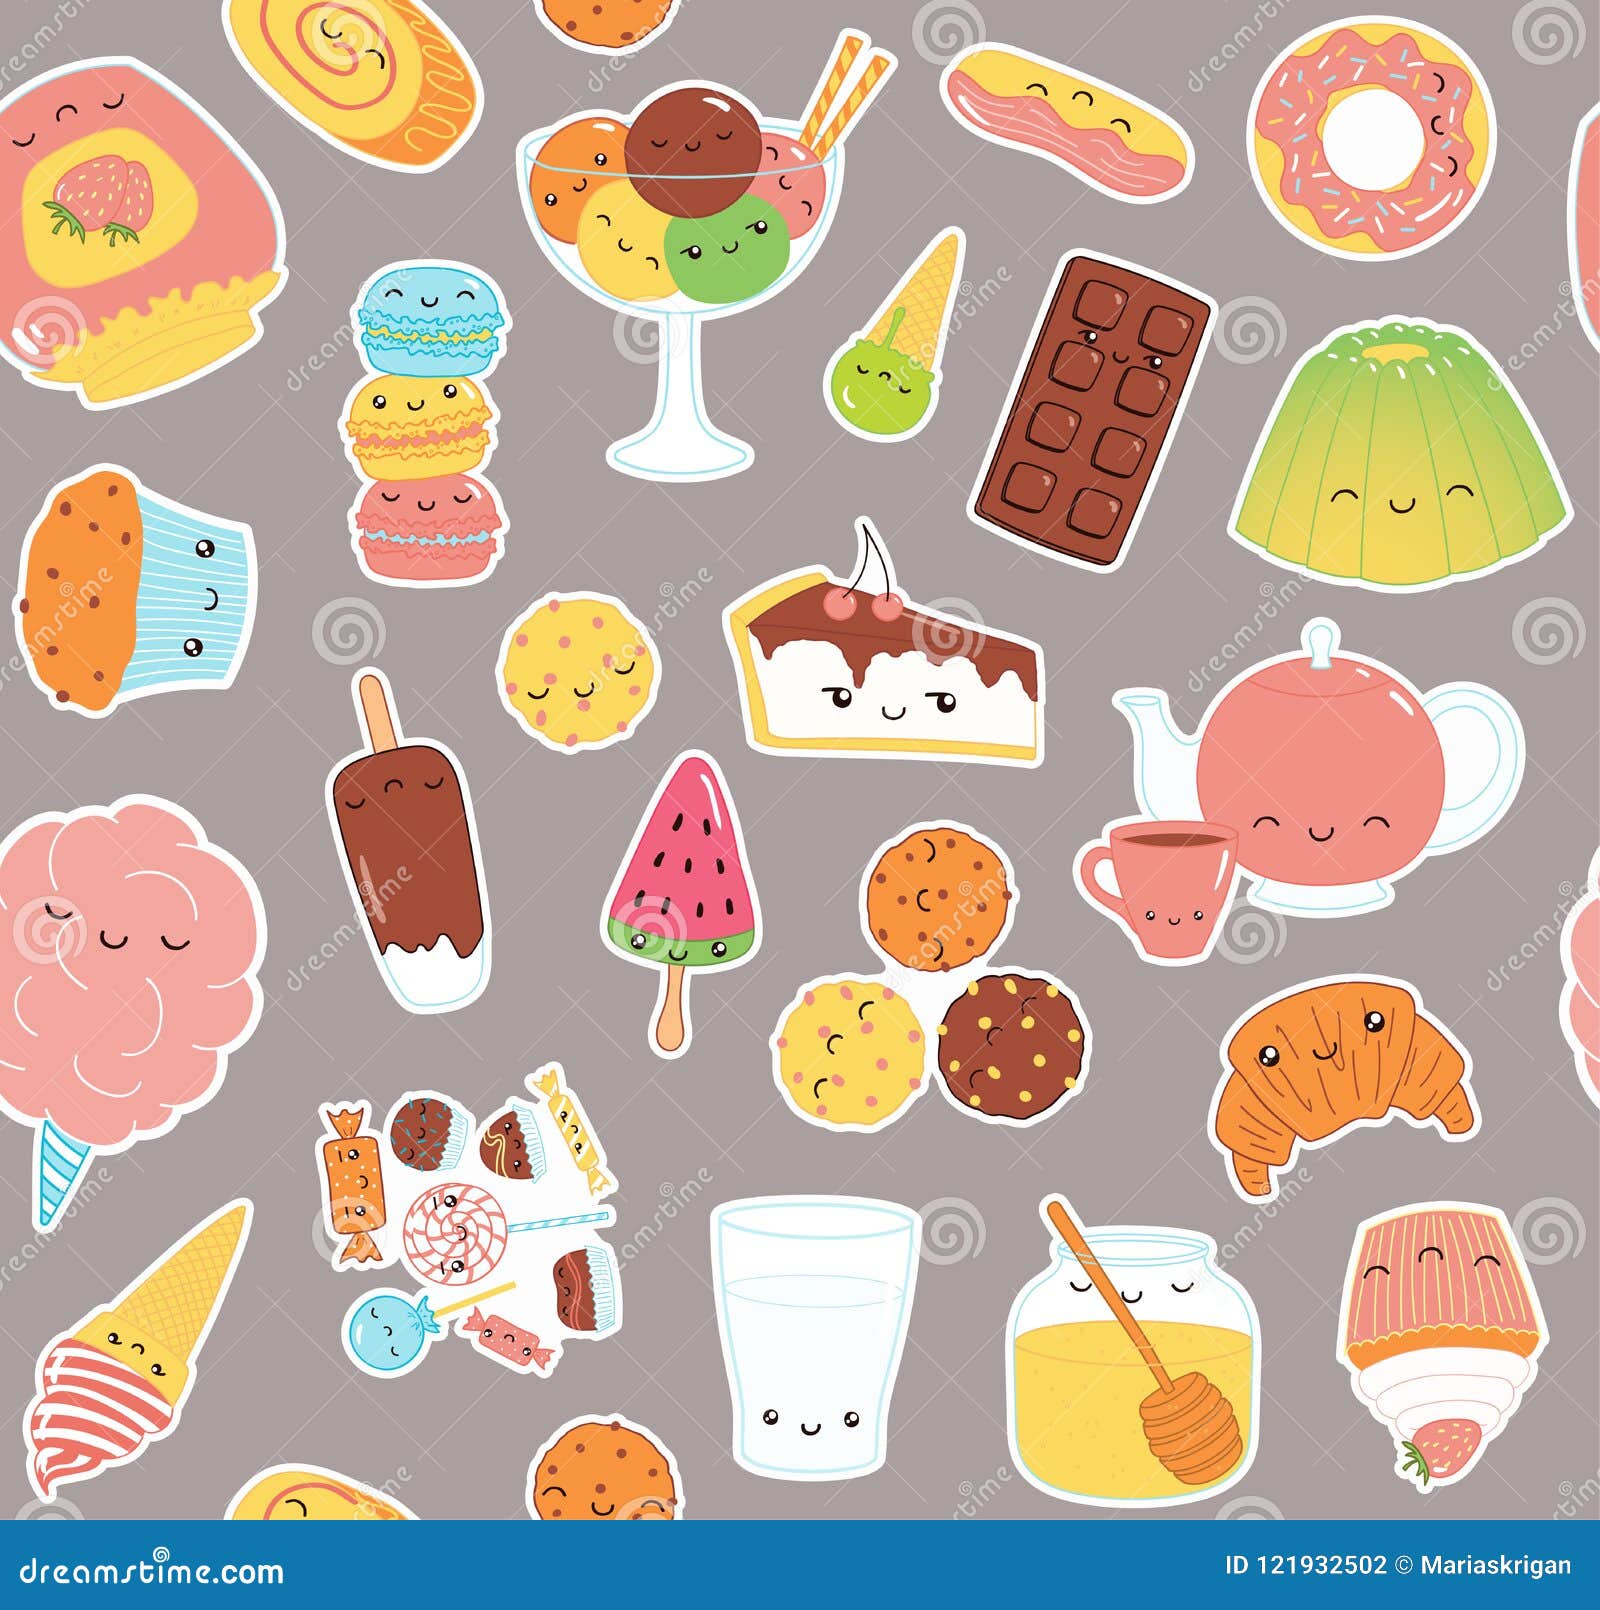 kawaii sweet food stickers pattern stock vector illustration of child dessert 121932502